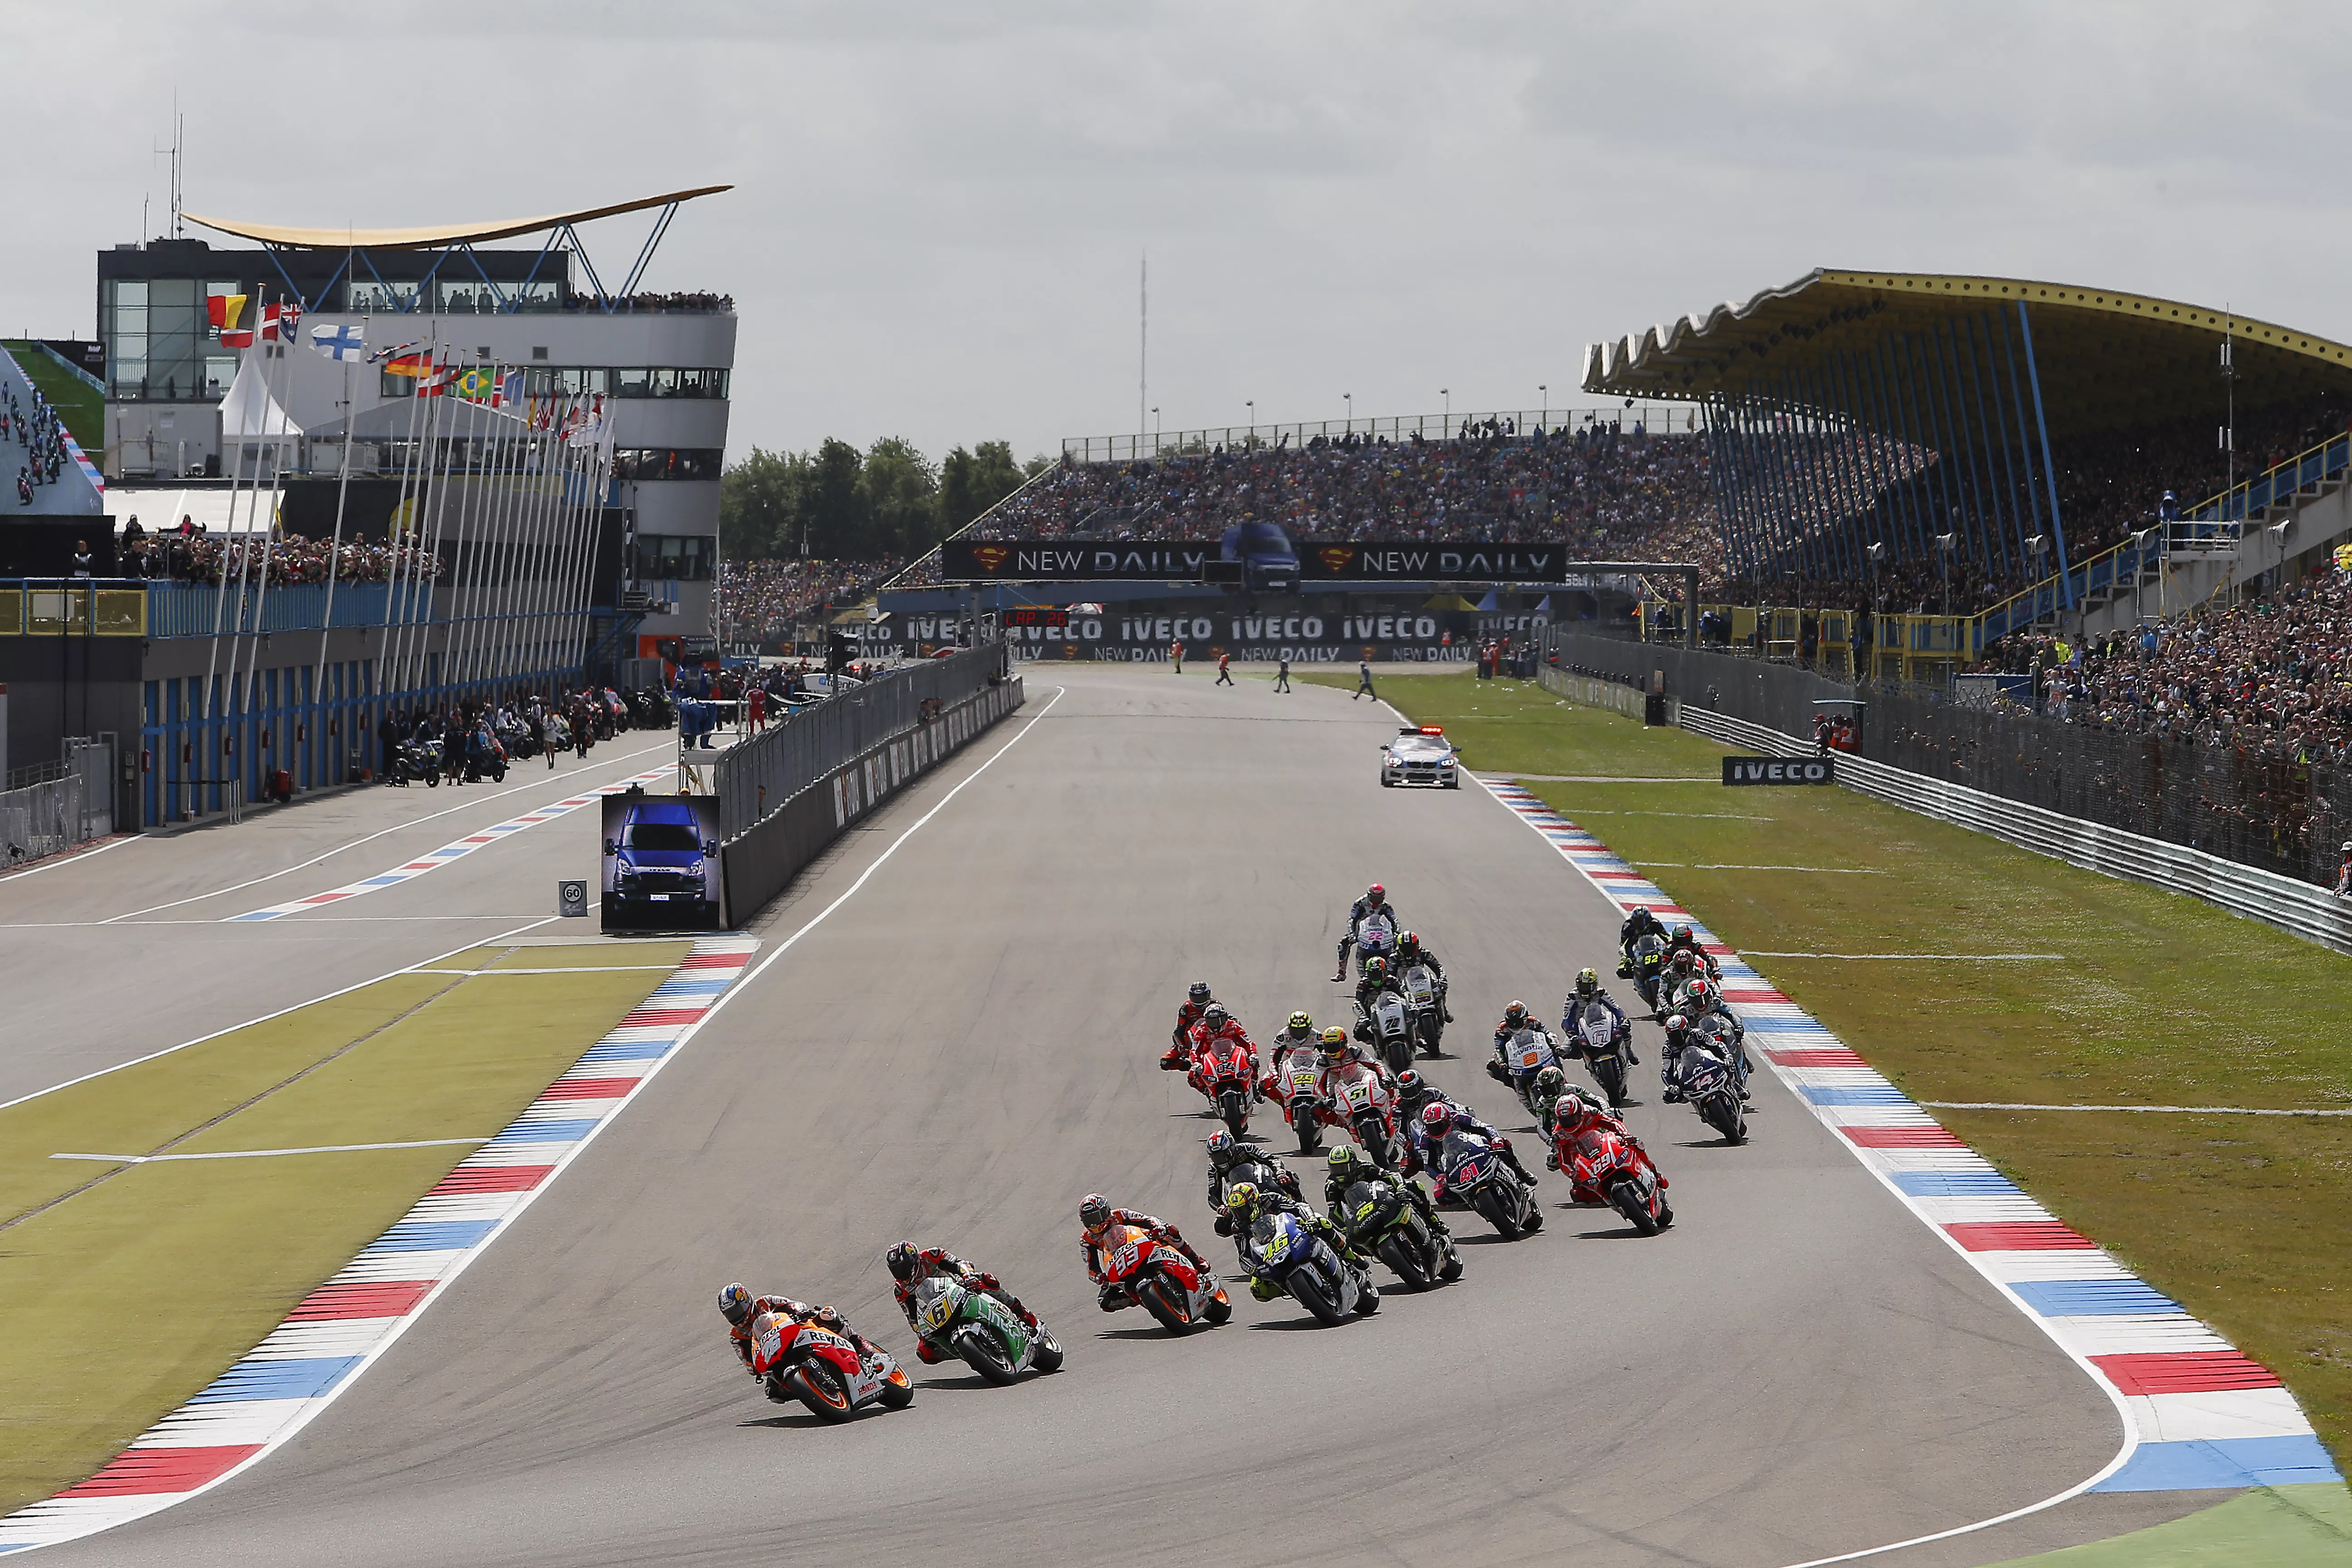 TT Circuit Assen in Netherlands, Europe | Racing,Motorcycles - Rated 9.6